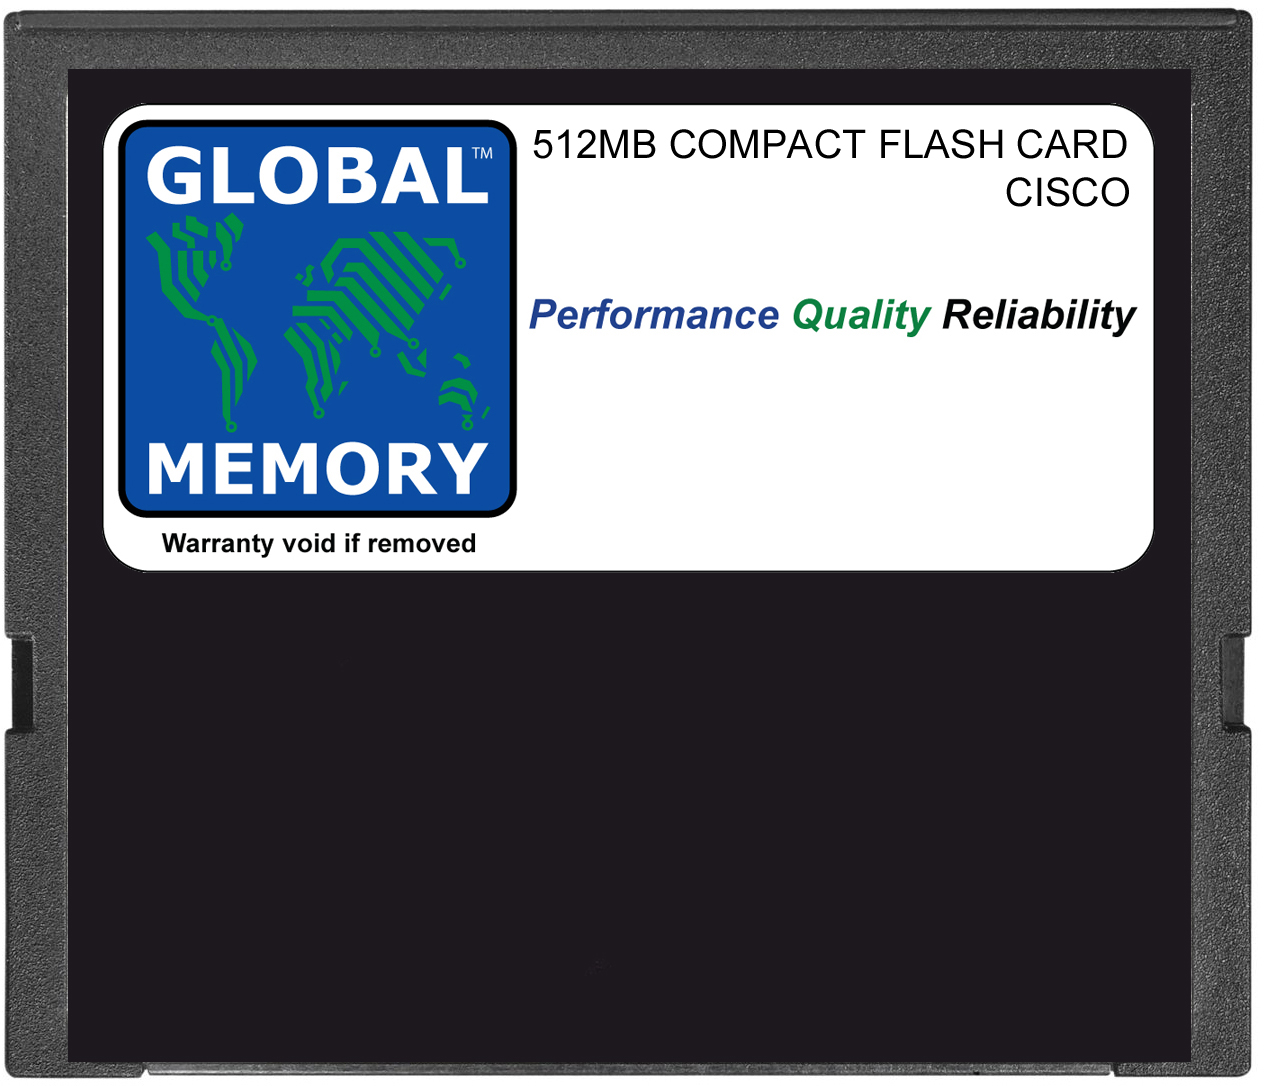 512MB COMPACT FLASH CARD MEMORY FOR CISCO ASA 5500 FIREWALL (ASA5500-CF-512MB)